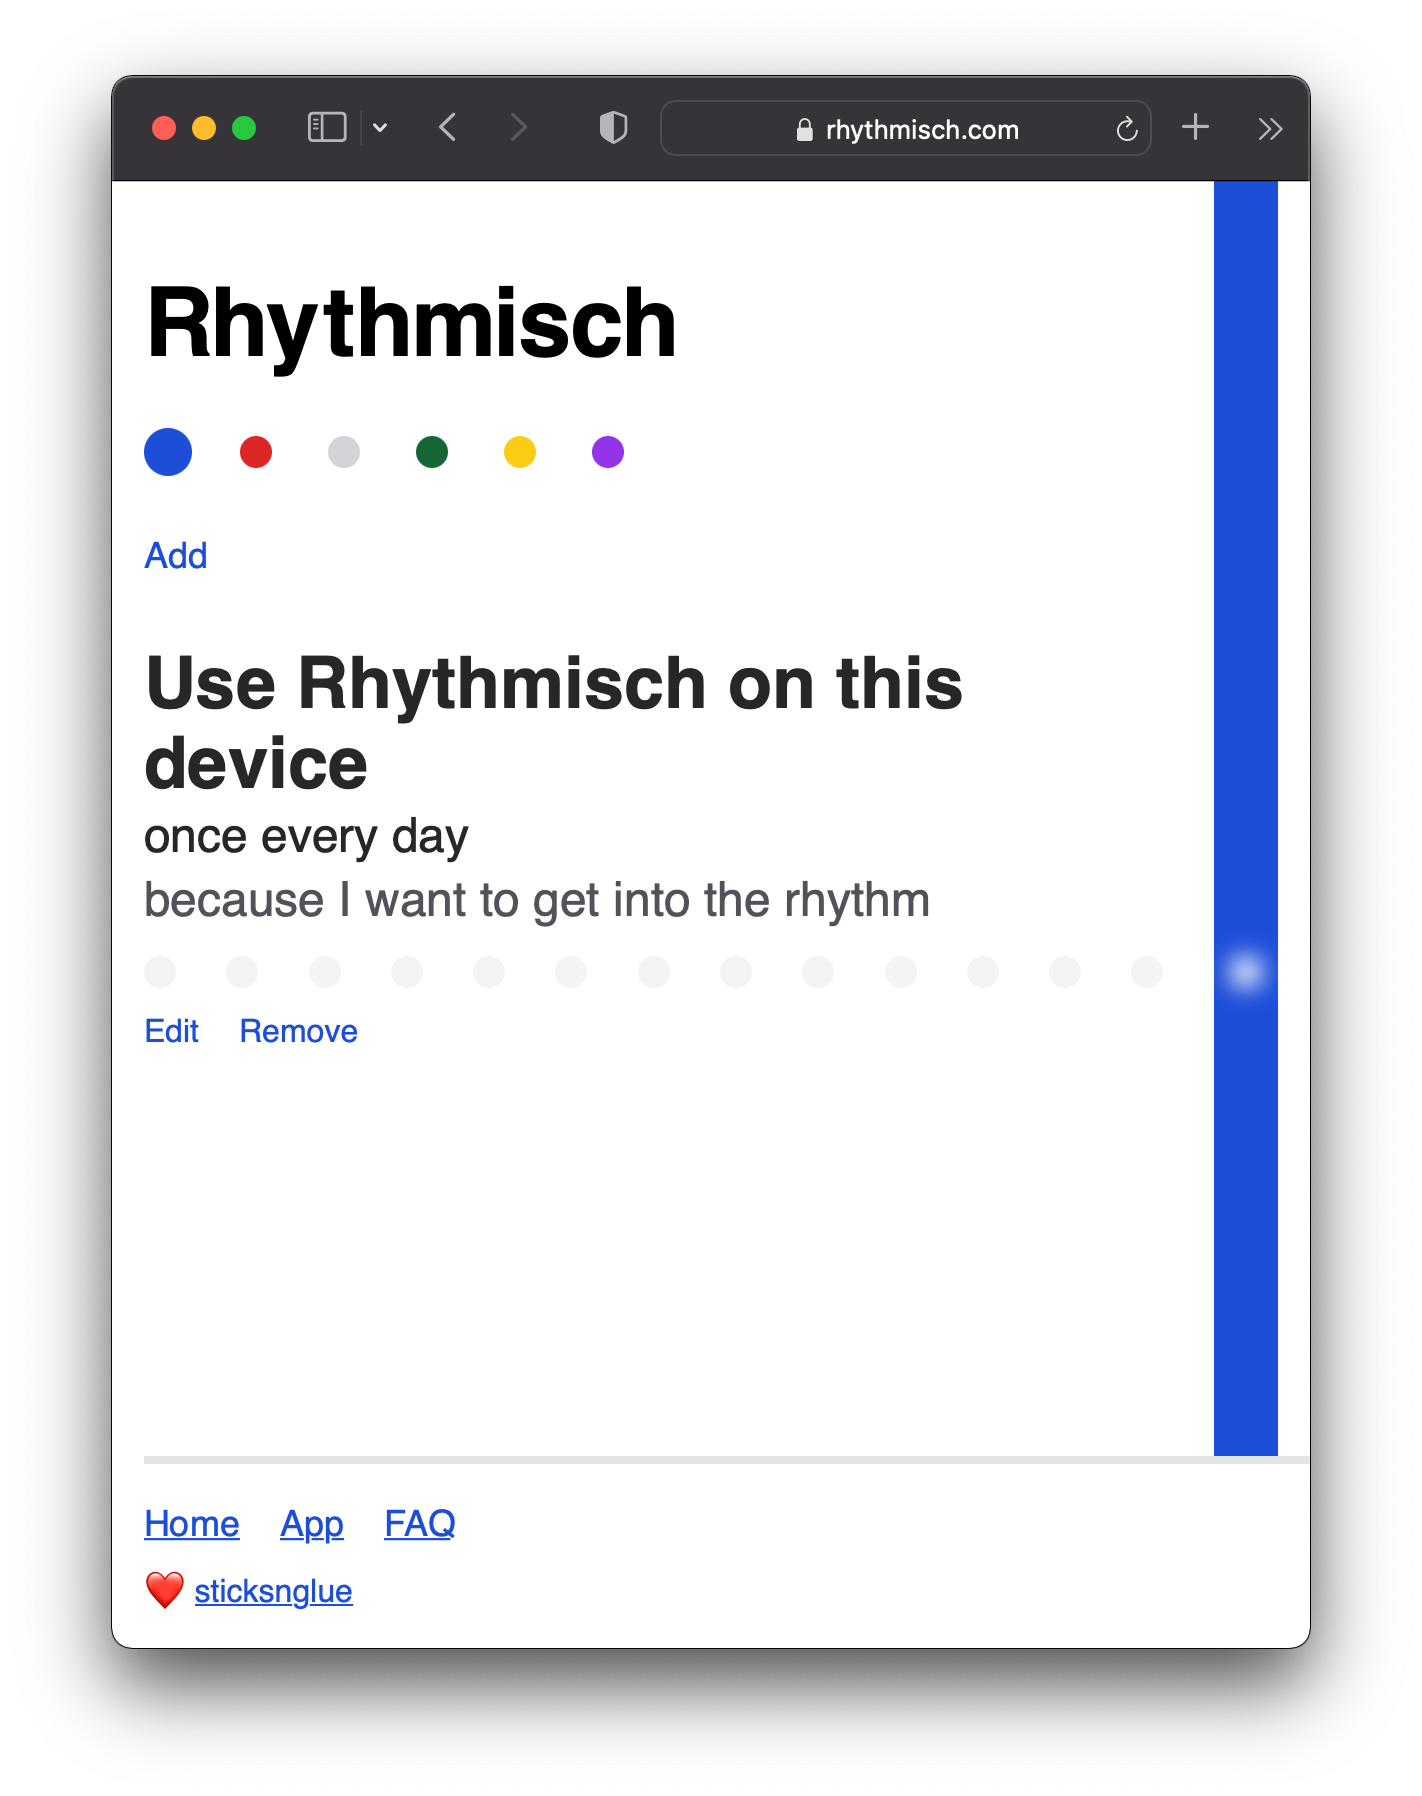 The first released version of Rhythmisch